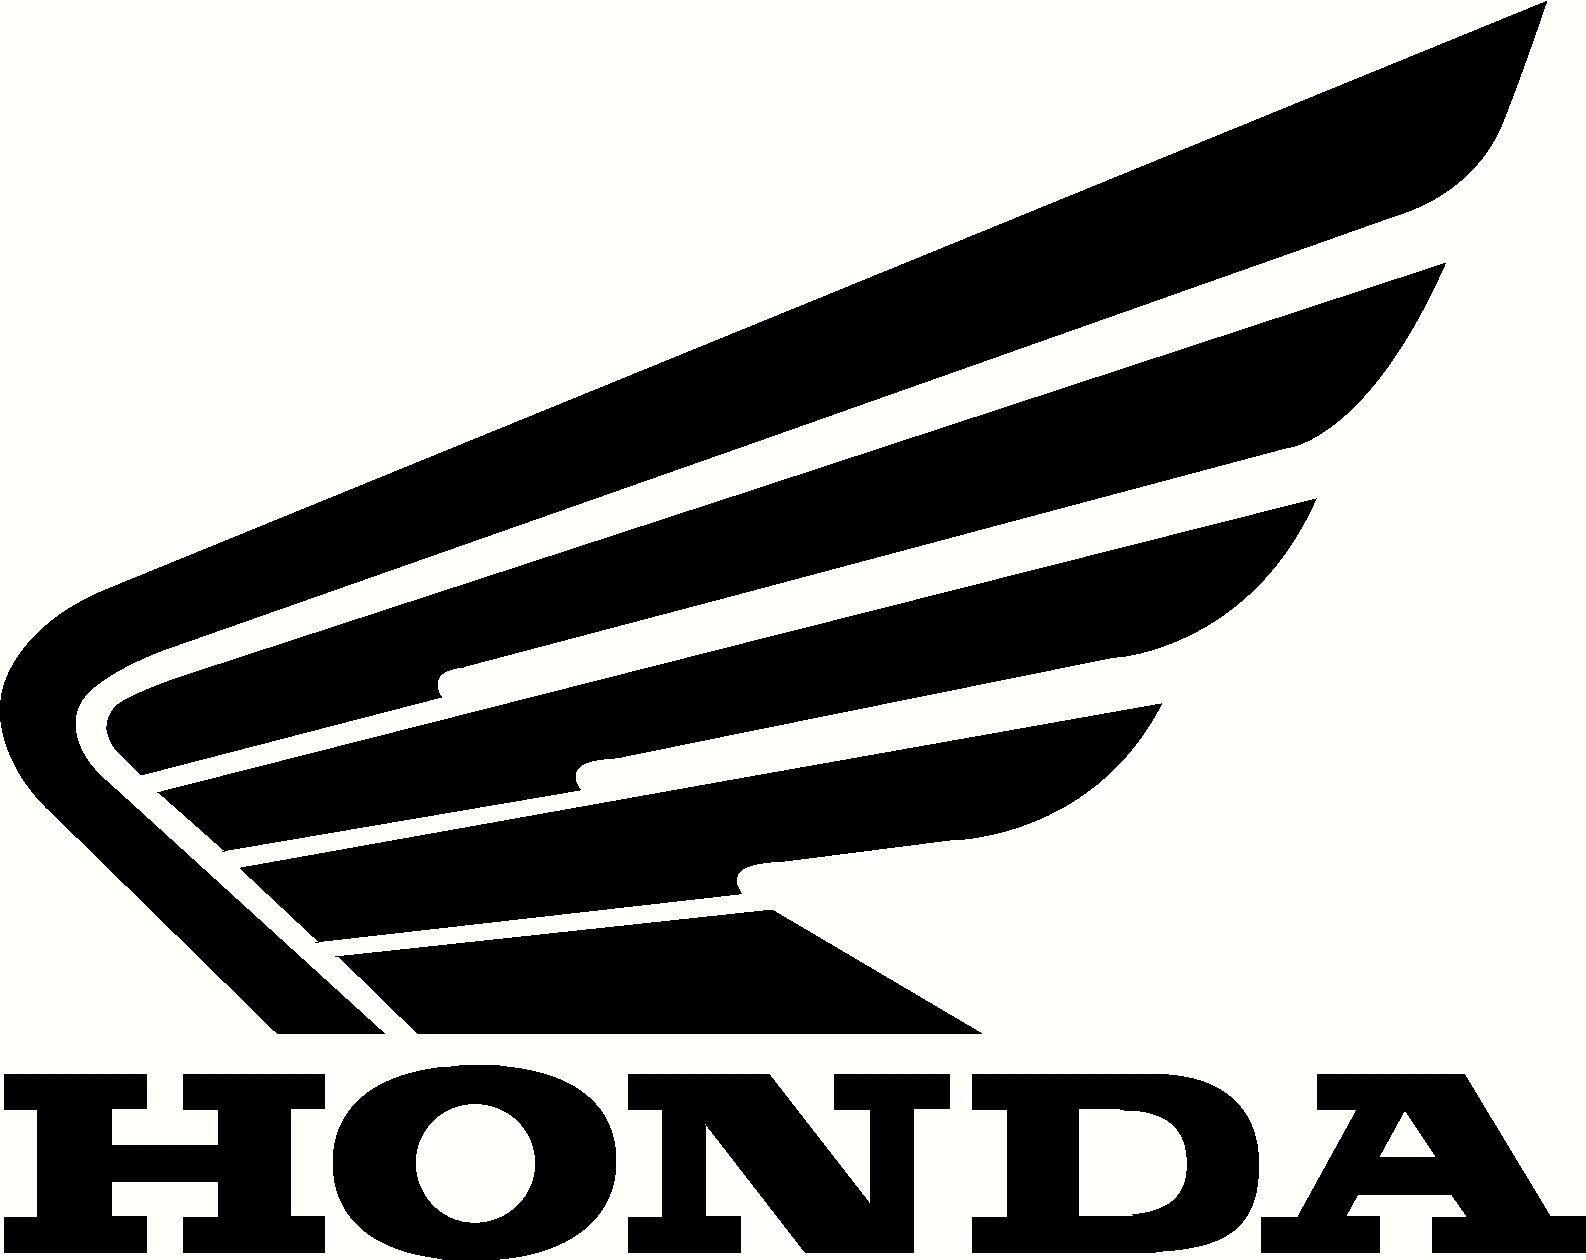 Honda Motorcycle Logo - Pin by Ross Robinson on motorcycles logos | Pinterest | Motorcycle ...